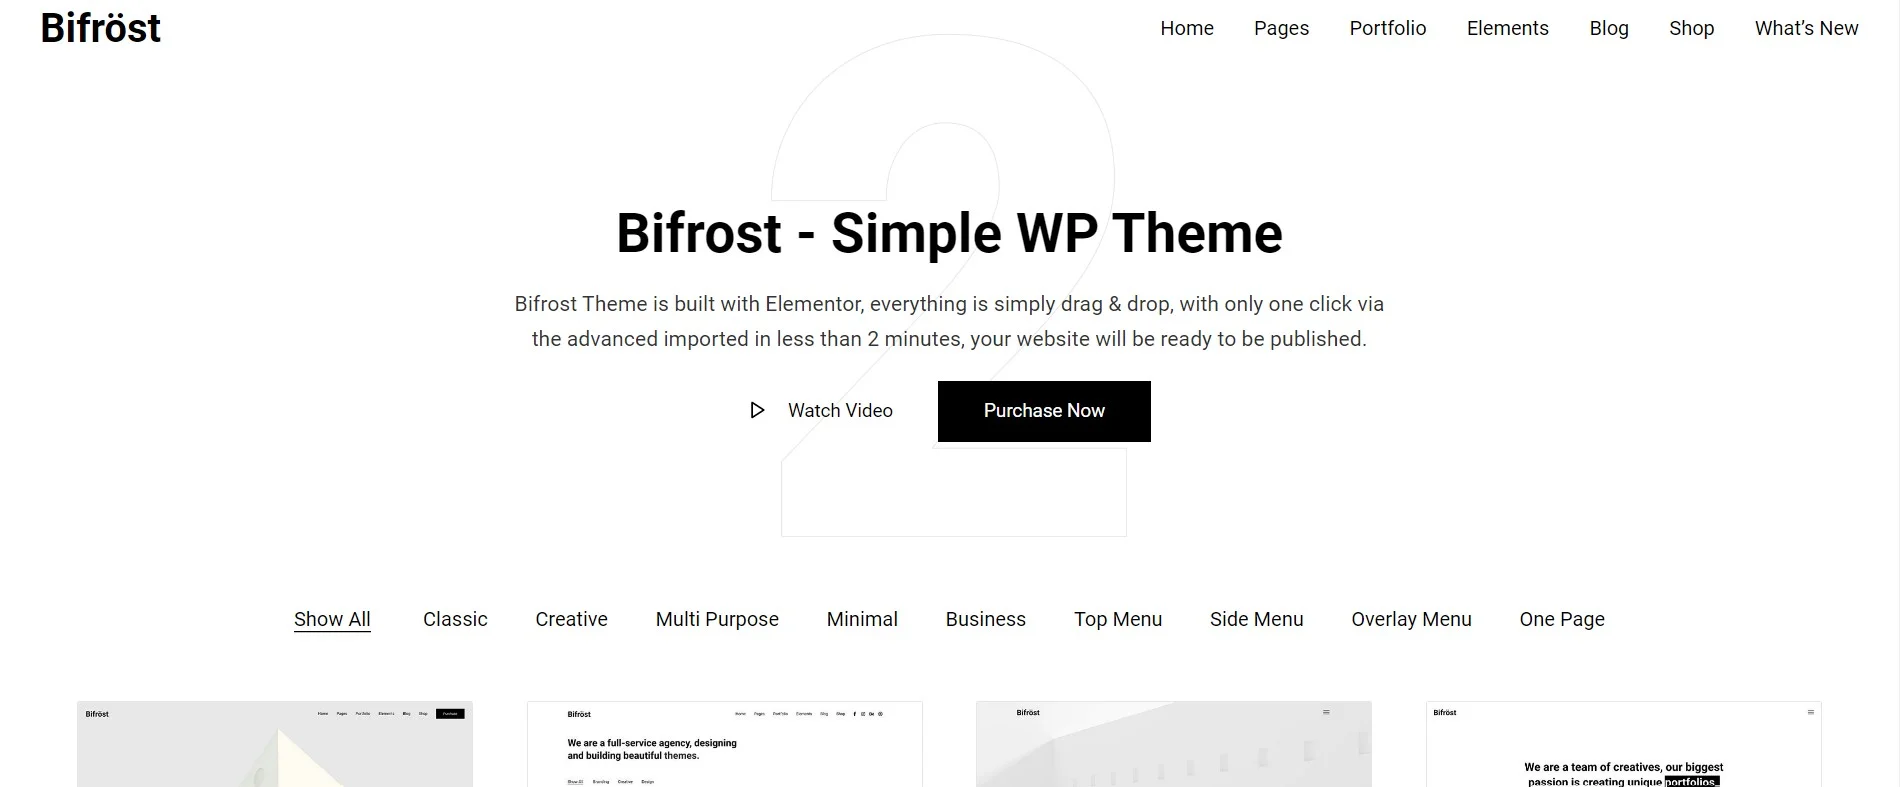 Bifrost WP Theme - Elementor